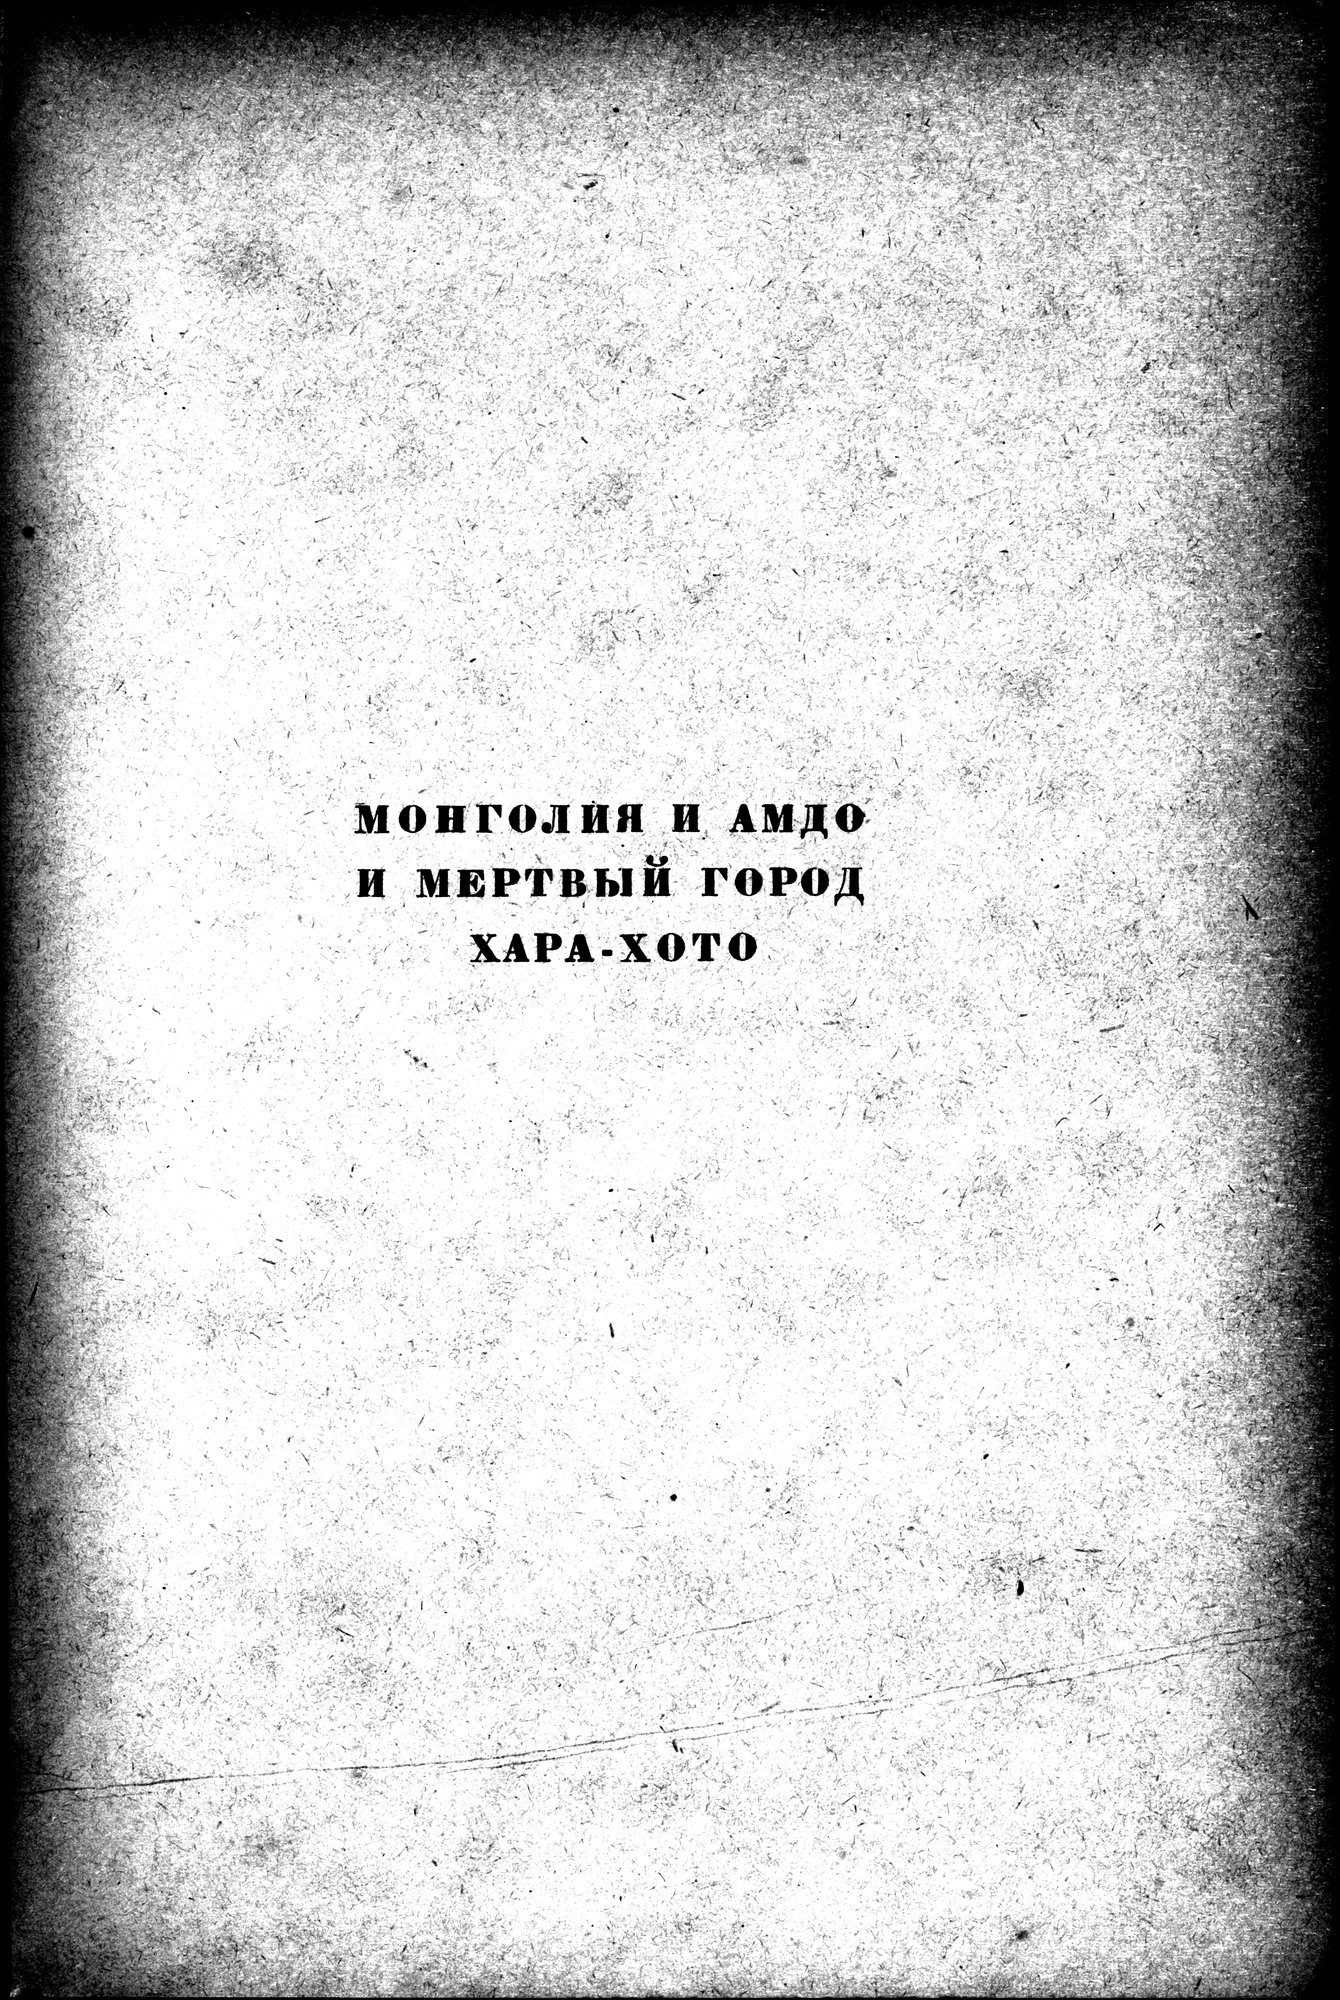 Mongoliya i Amdo i mertby gorod Khara-Khoto : vol.1 / Page 7 (Grayscale High Resolution Image)